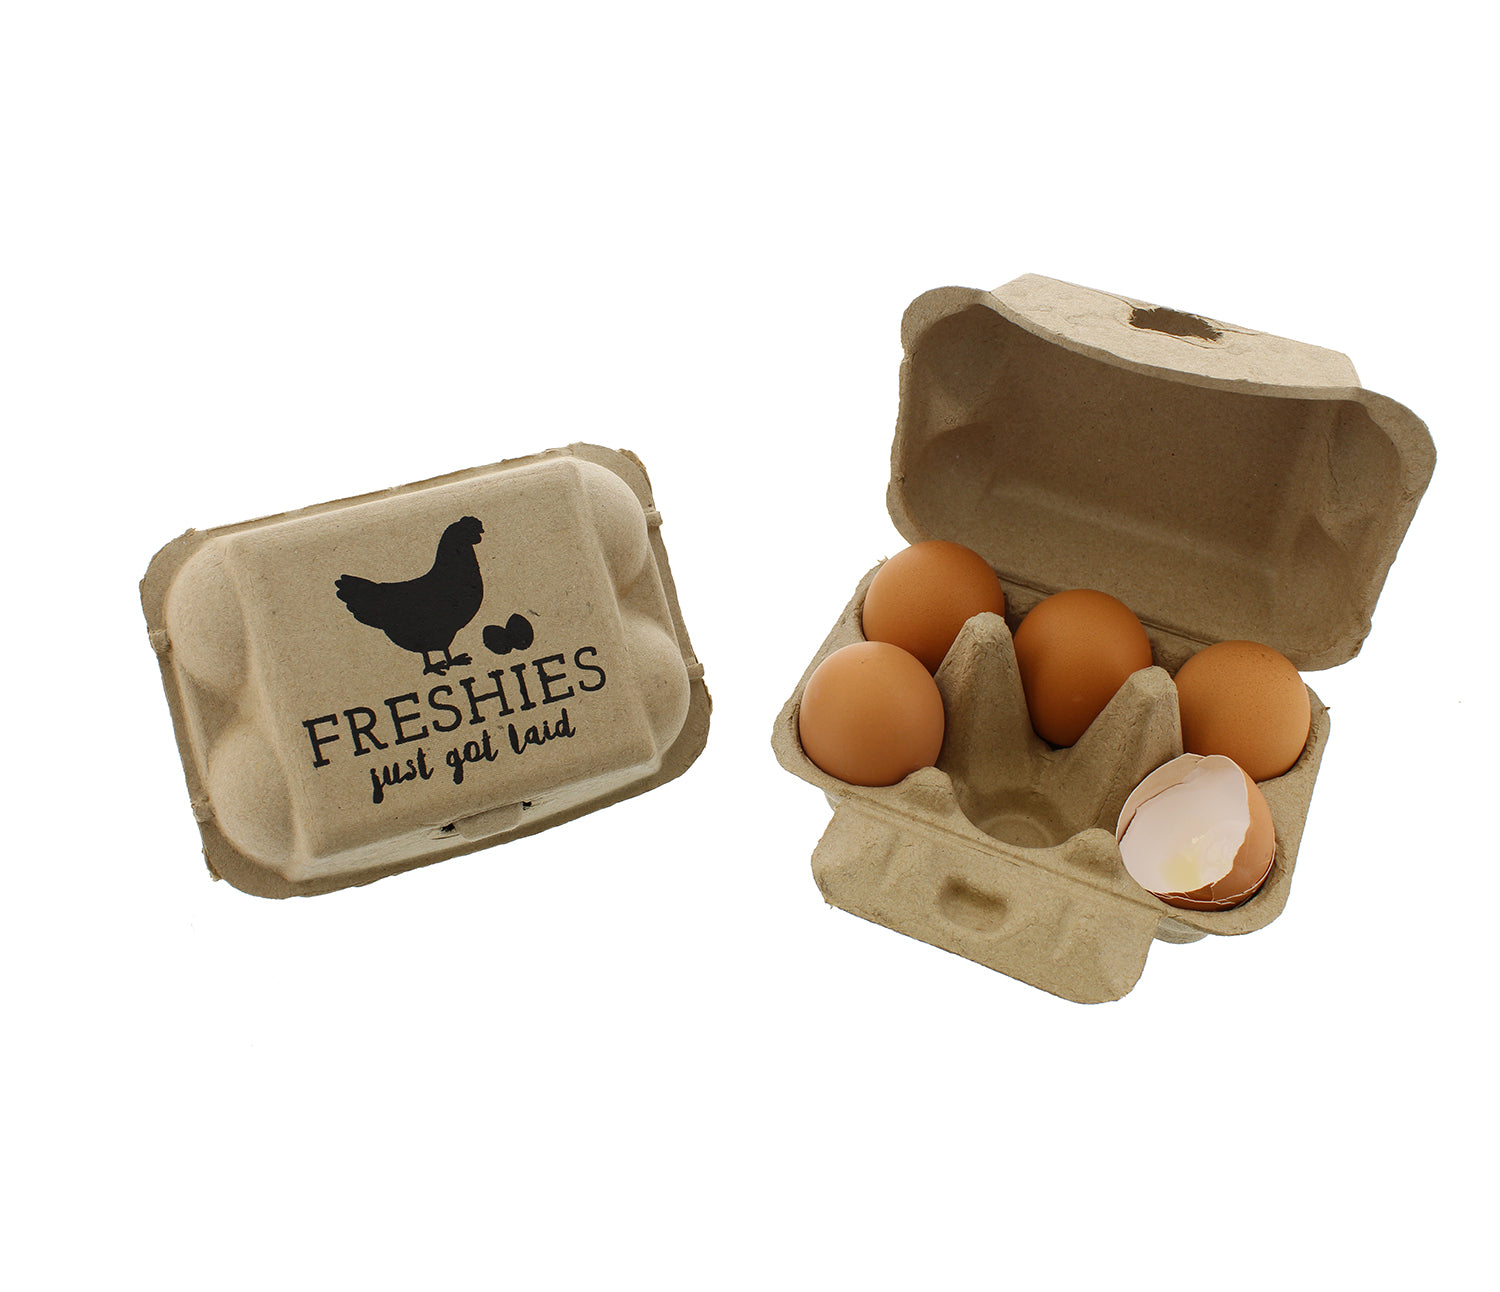 100PCS Egg Cartons Cheap Bulk, Empty Plastic Chicken Egg Carton, Each 6